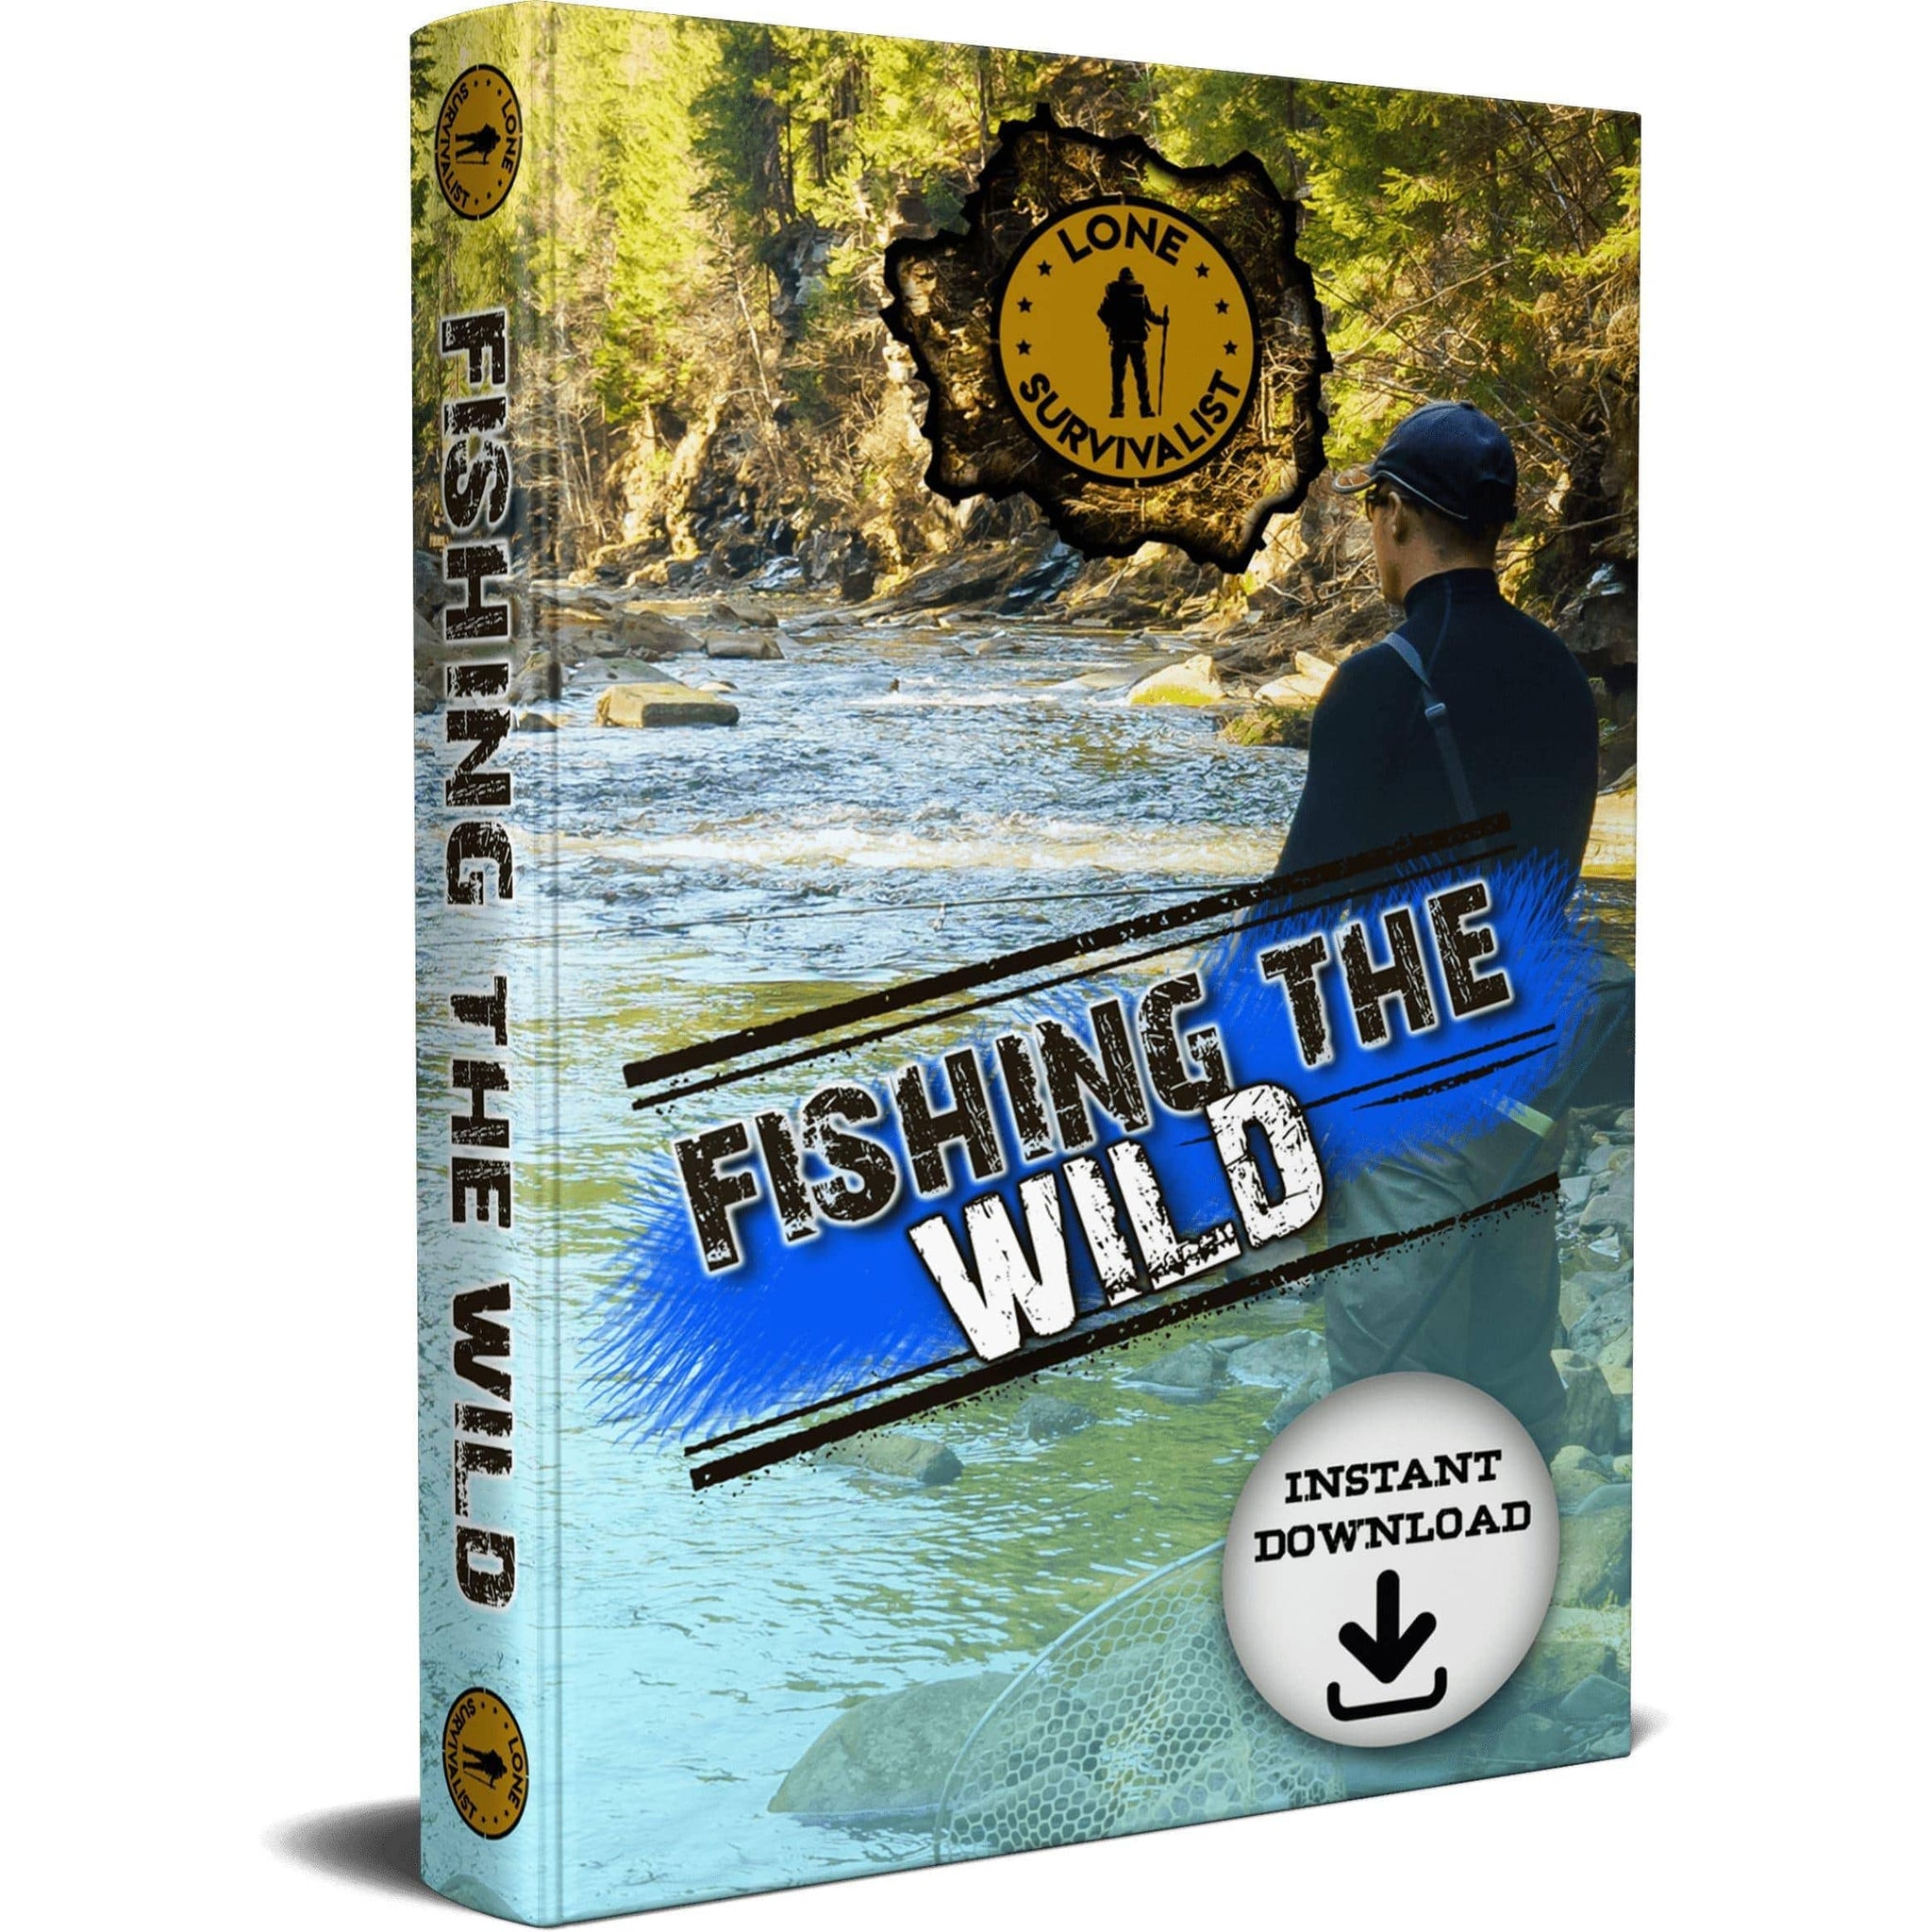 Fishing The Wild E Book